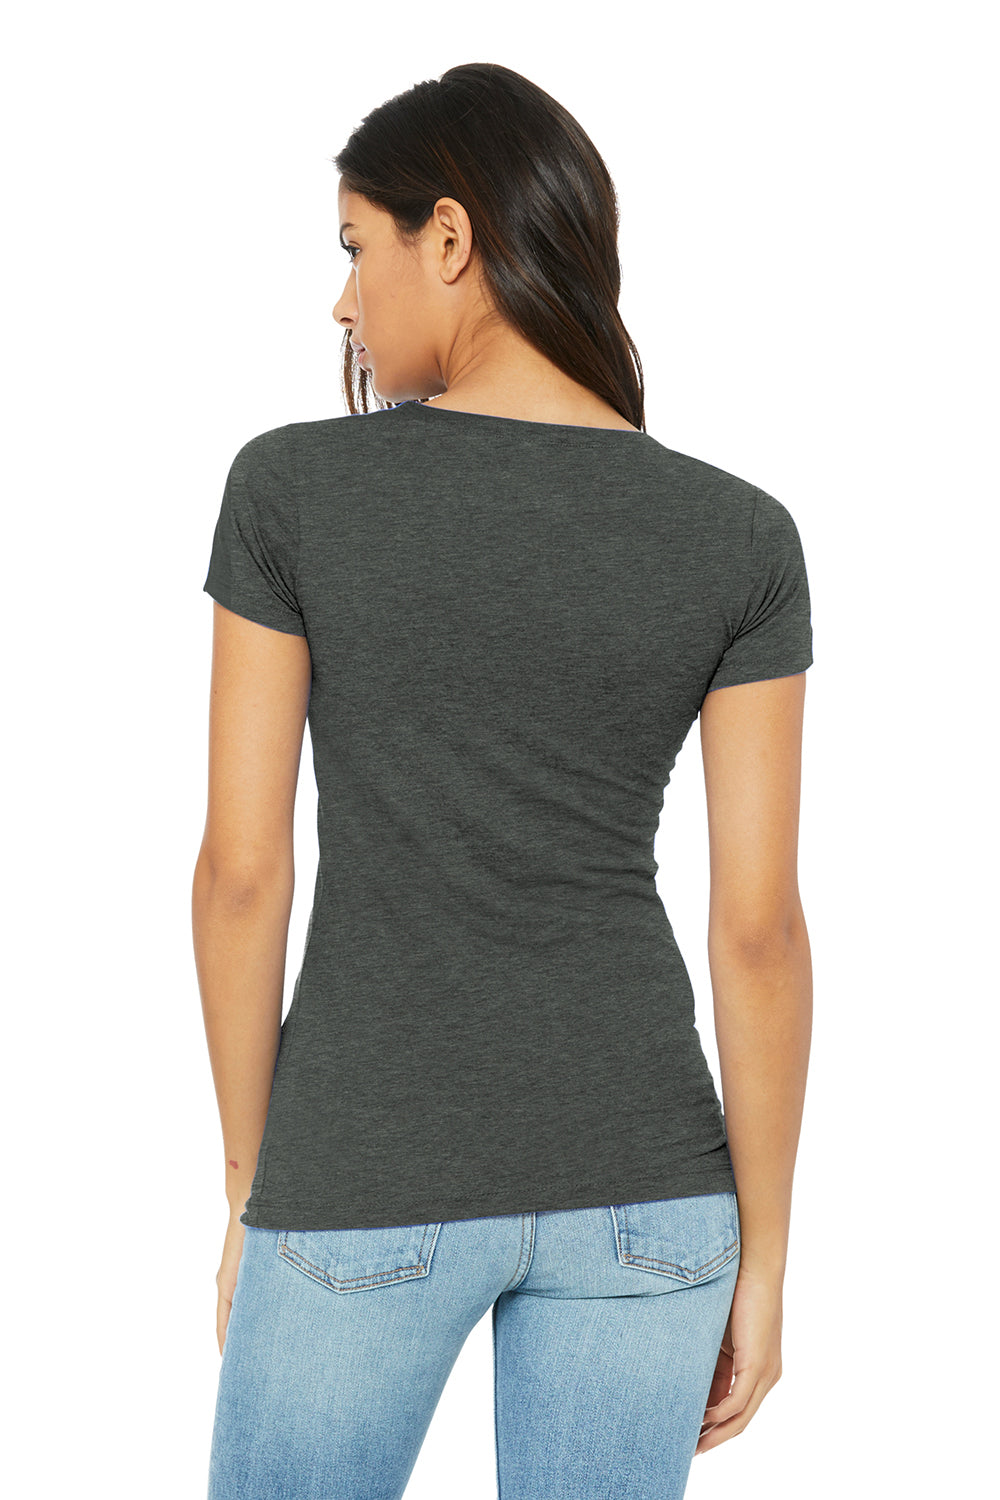 Bella + Canvas BC6004/6004 Womens The Favorite Short Sleeve Crewneck T-Shirt Heather Deep Grey Model Back